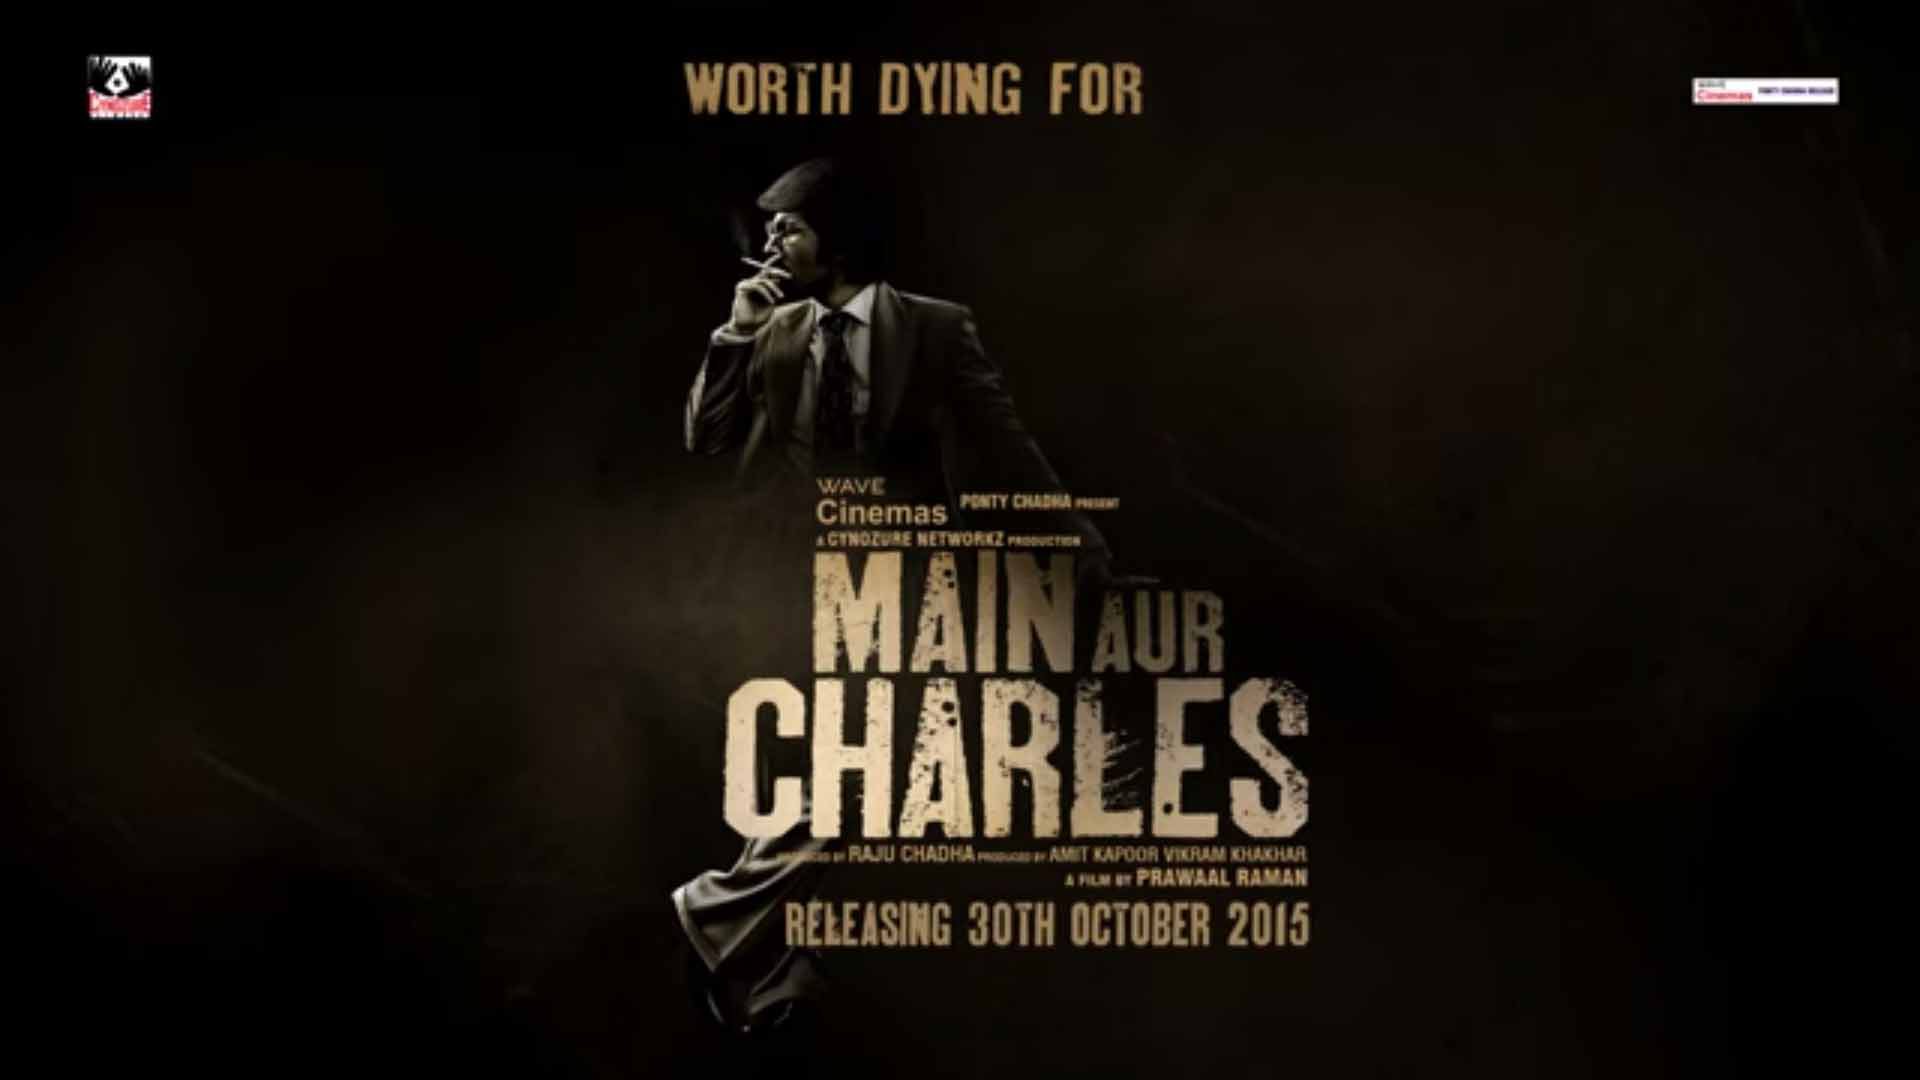 Watch - 'Main Aur Charles' Trailer starring Randeep Hooda, Richa Chadda